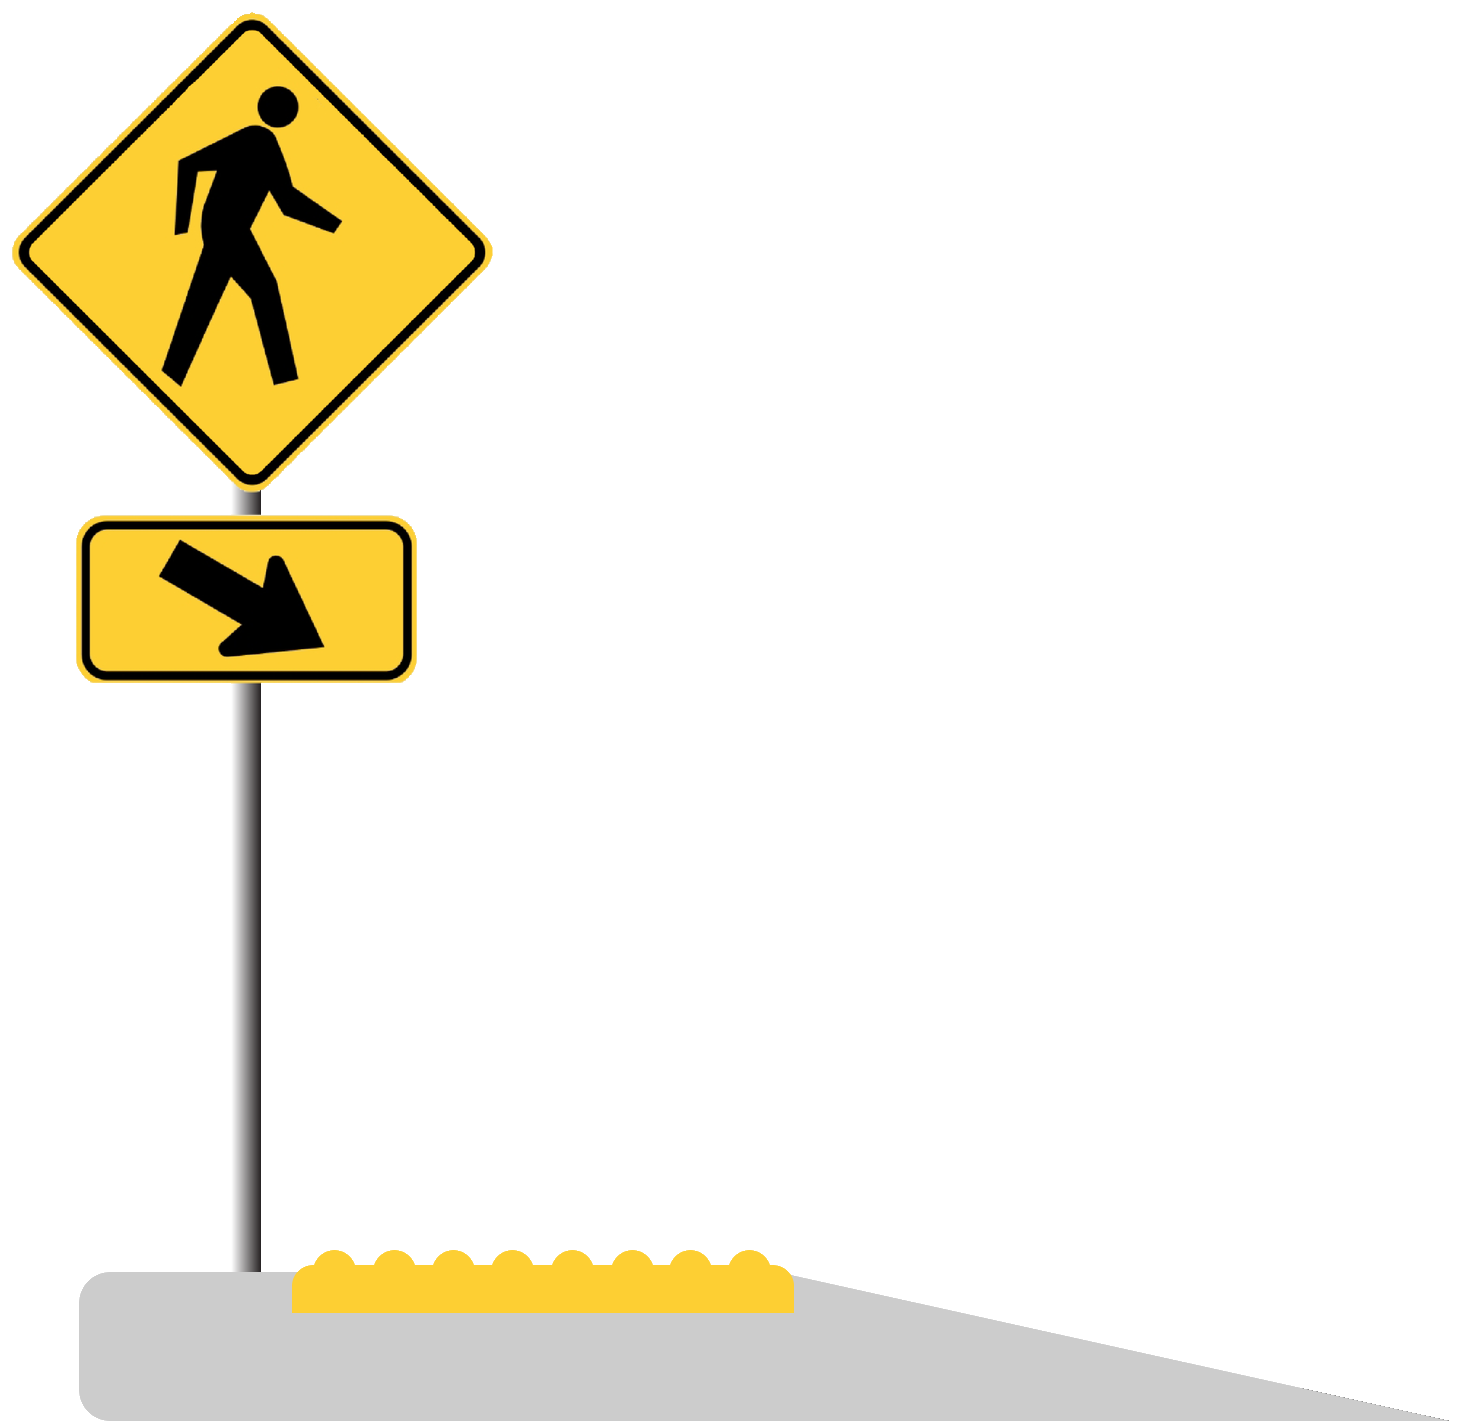 curb ramp icon